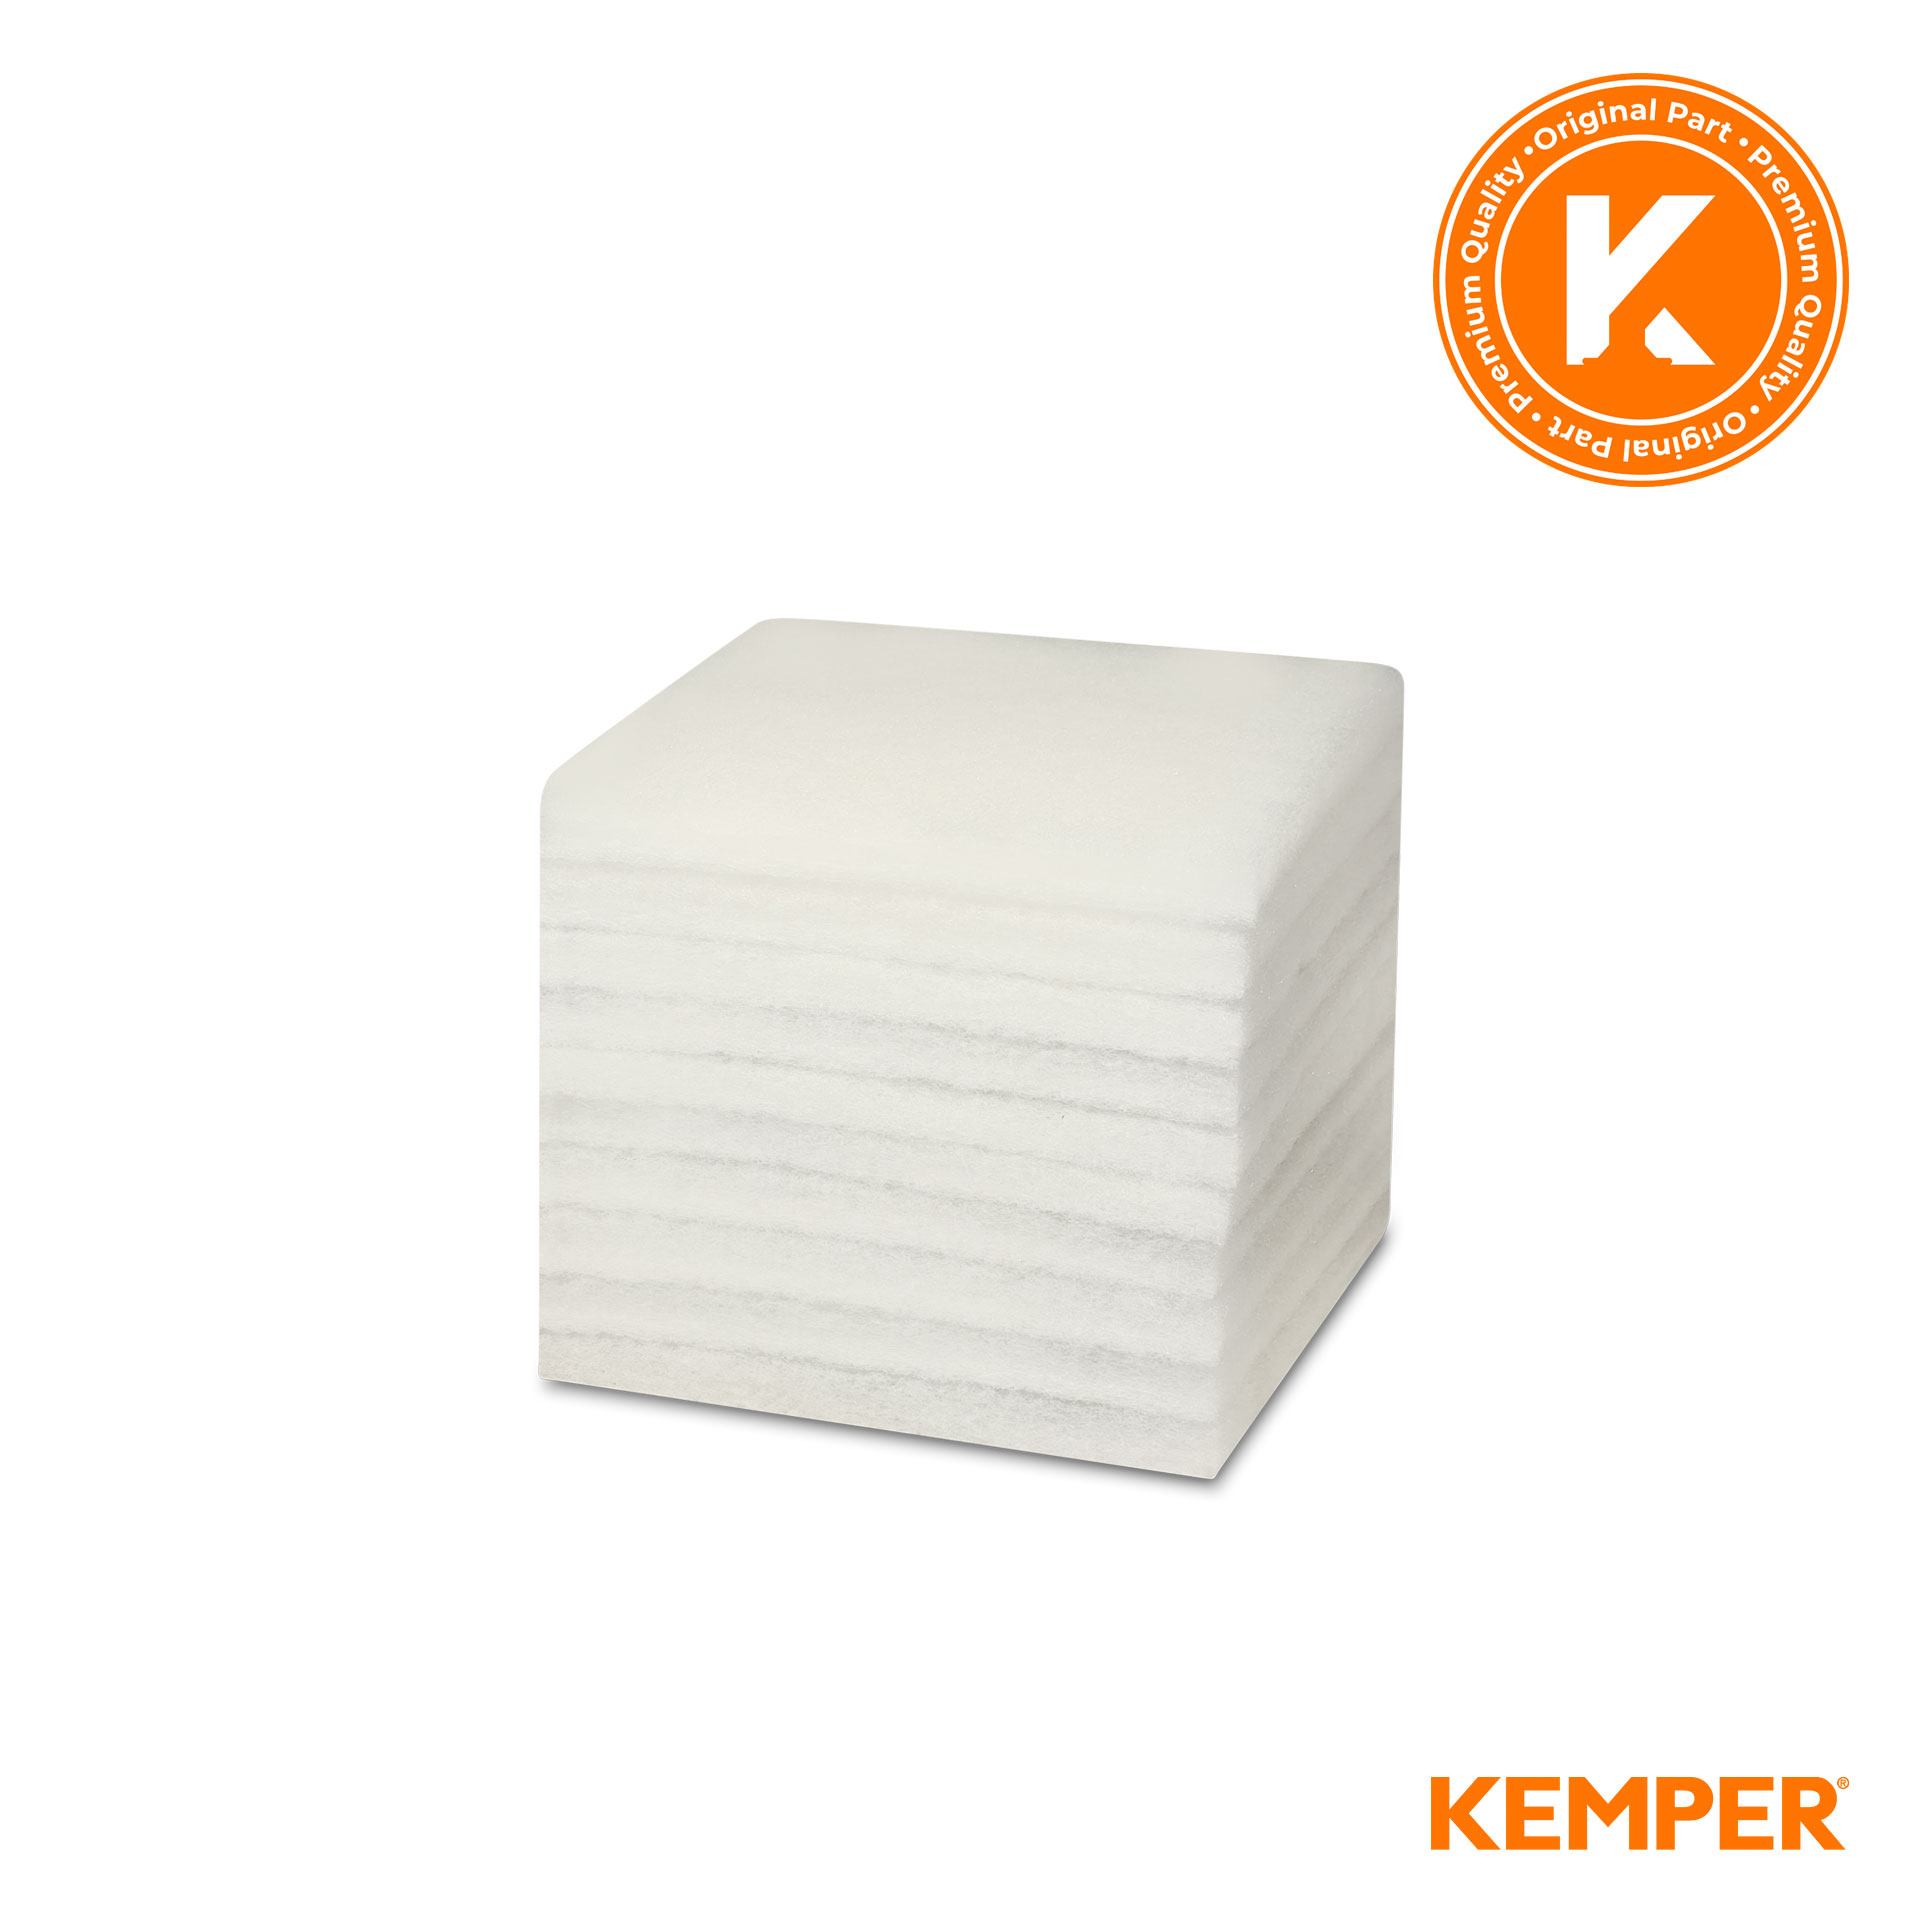 1090472 - KEMPER Original Vorfiltermatte - passend für KEMPER-Produkte: MaxiFil, MaxiFil Clean, Vacufil compact, Patronenfilter stationär (PTF) - 207 x 207 x 17 mm